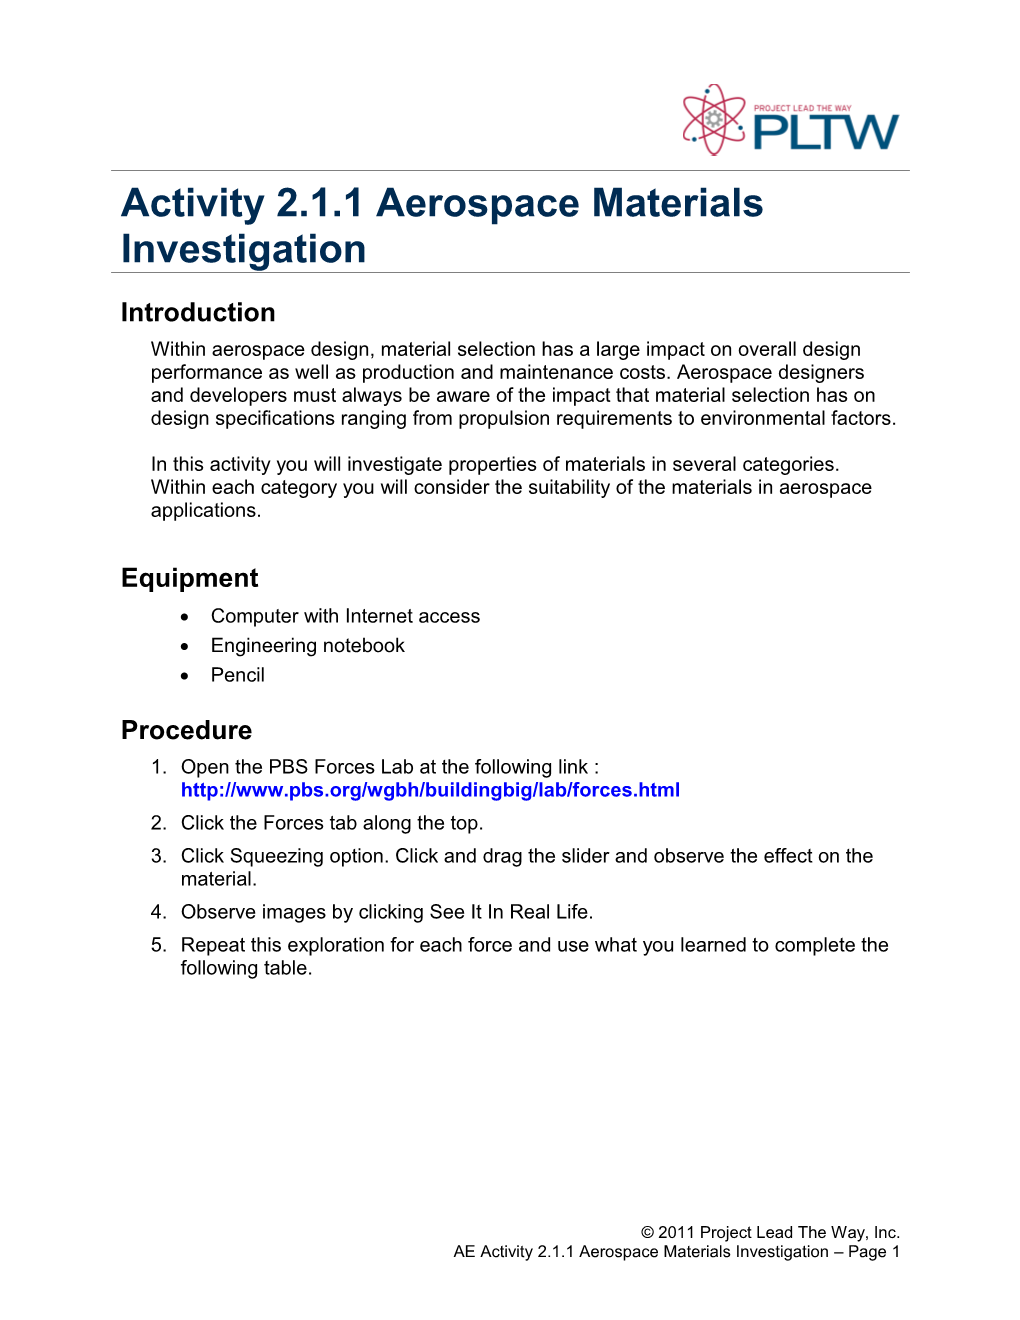 Activity 2.1.1 Aerospace Materials Investigation